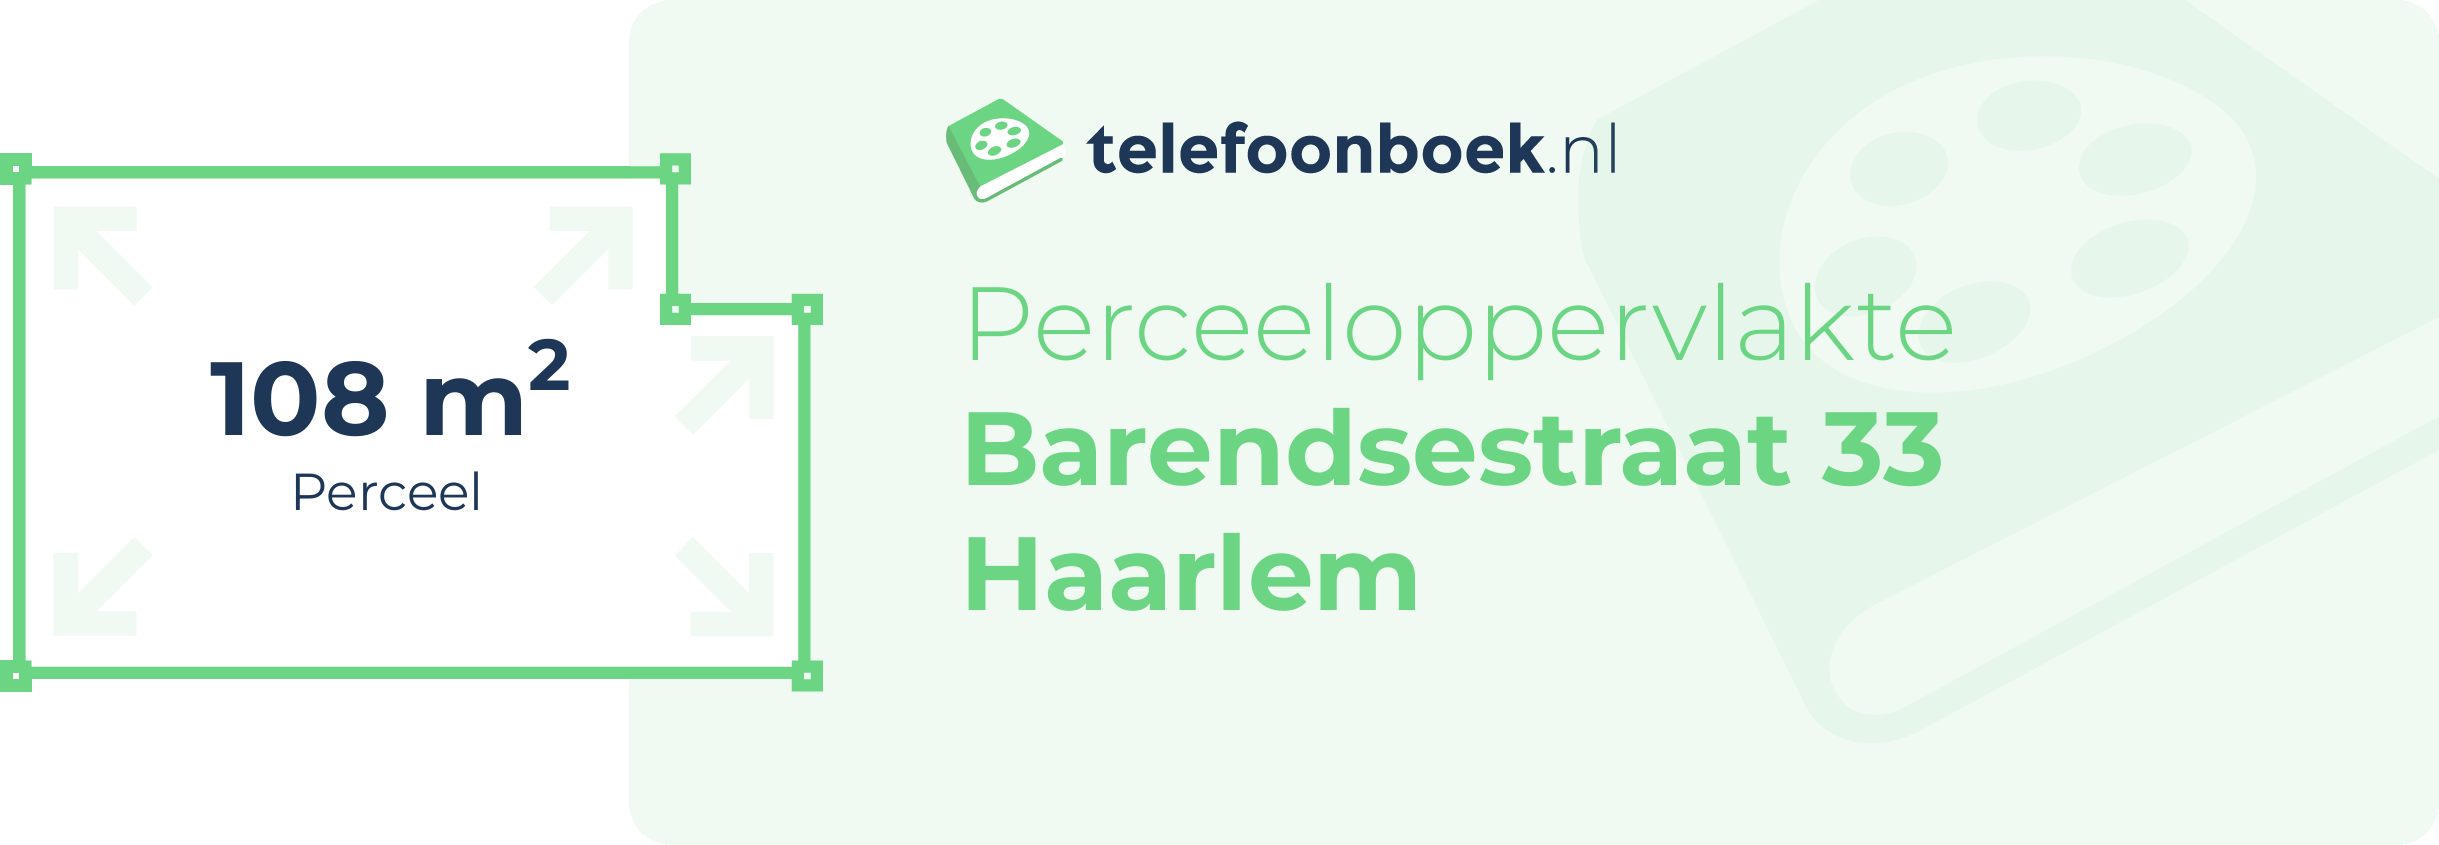 Perceeloppervlakte Barendsestraat 33 Haarlem